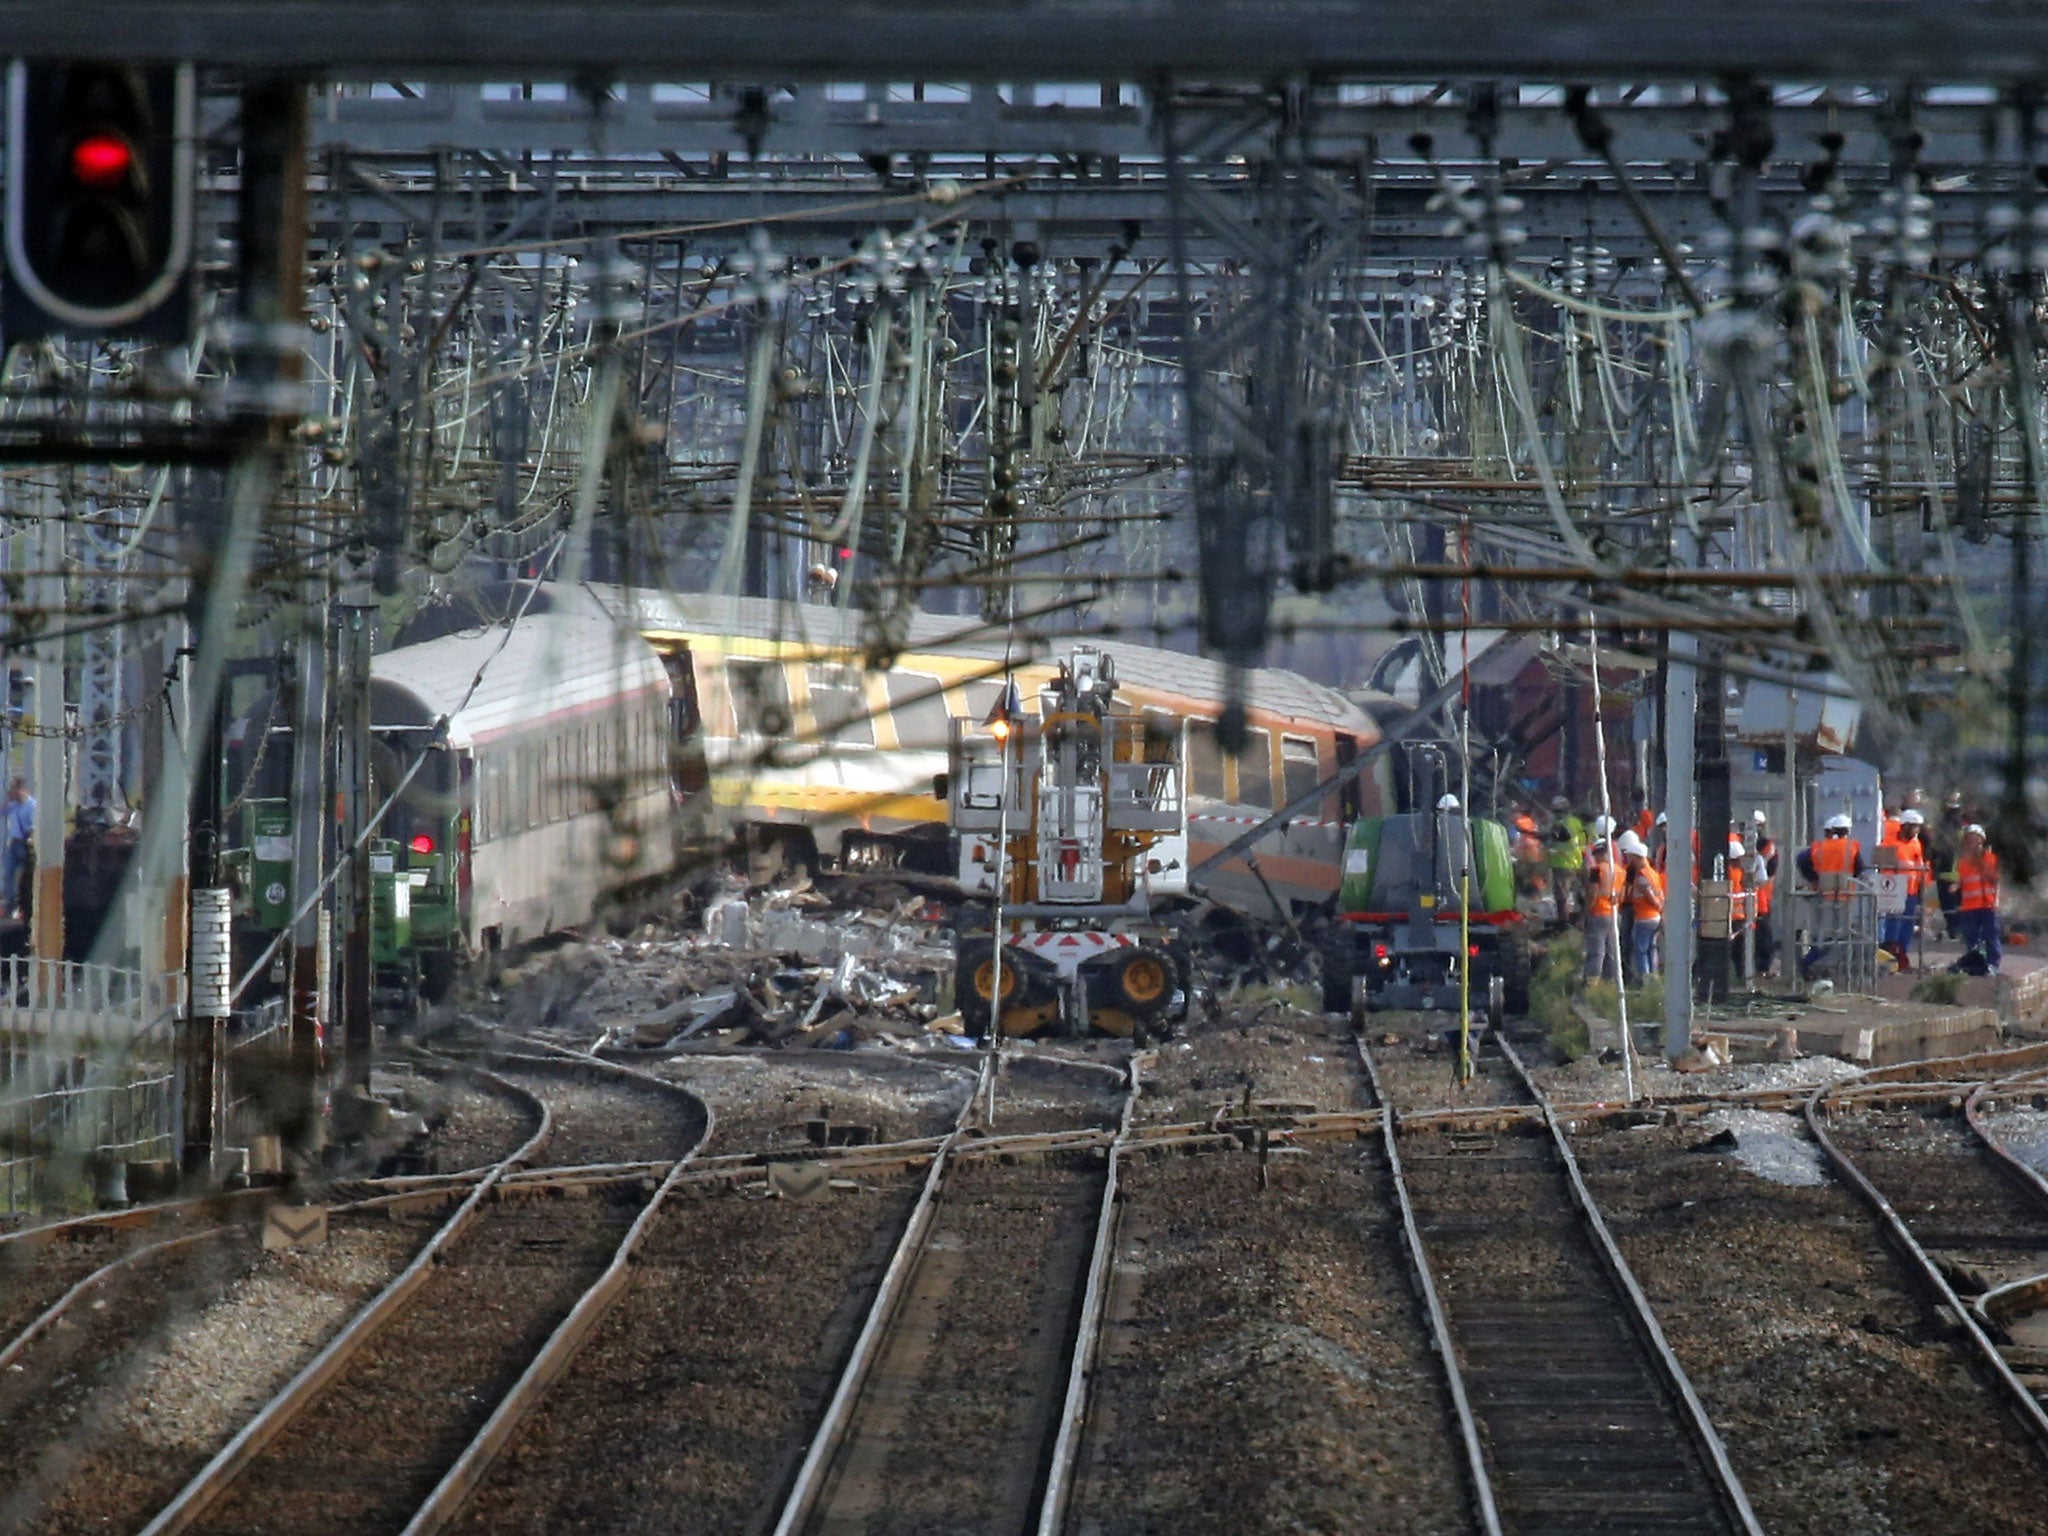 The scene of the derailment near Paris